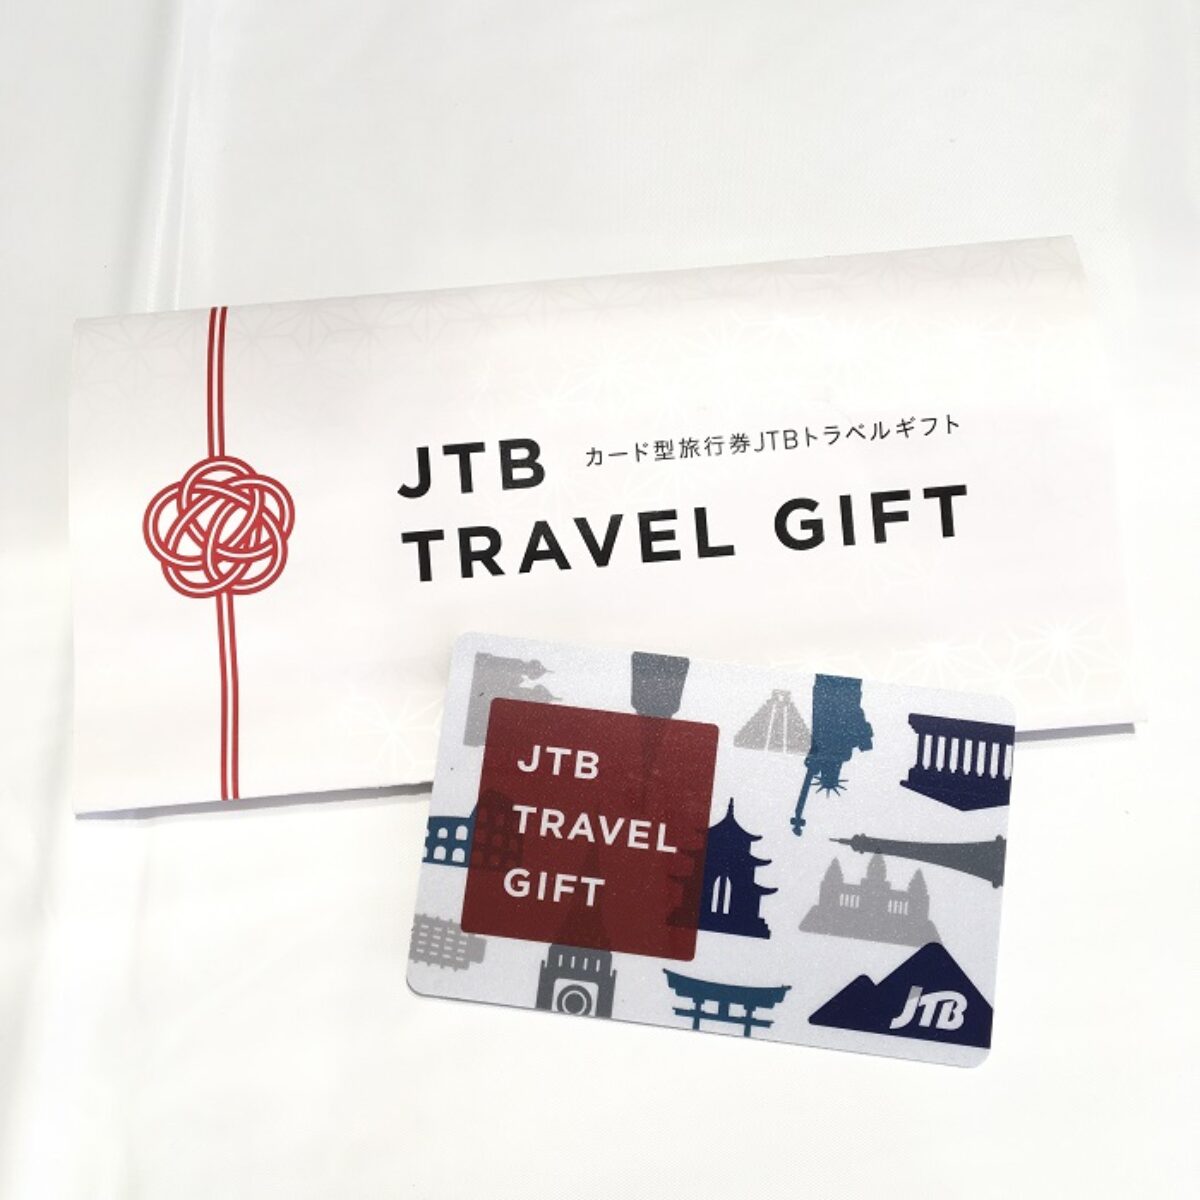 jtb travel card